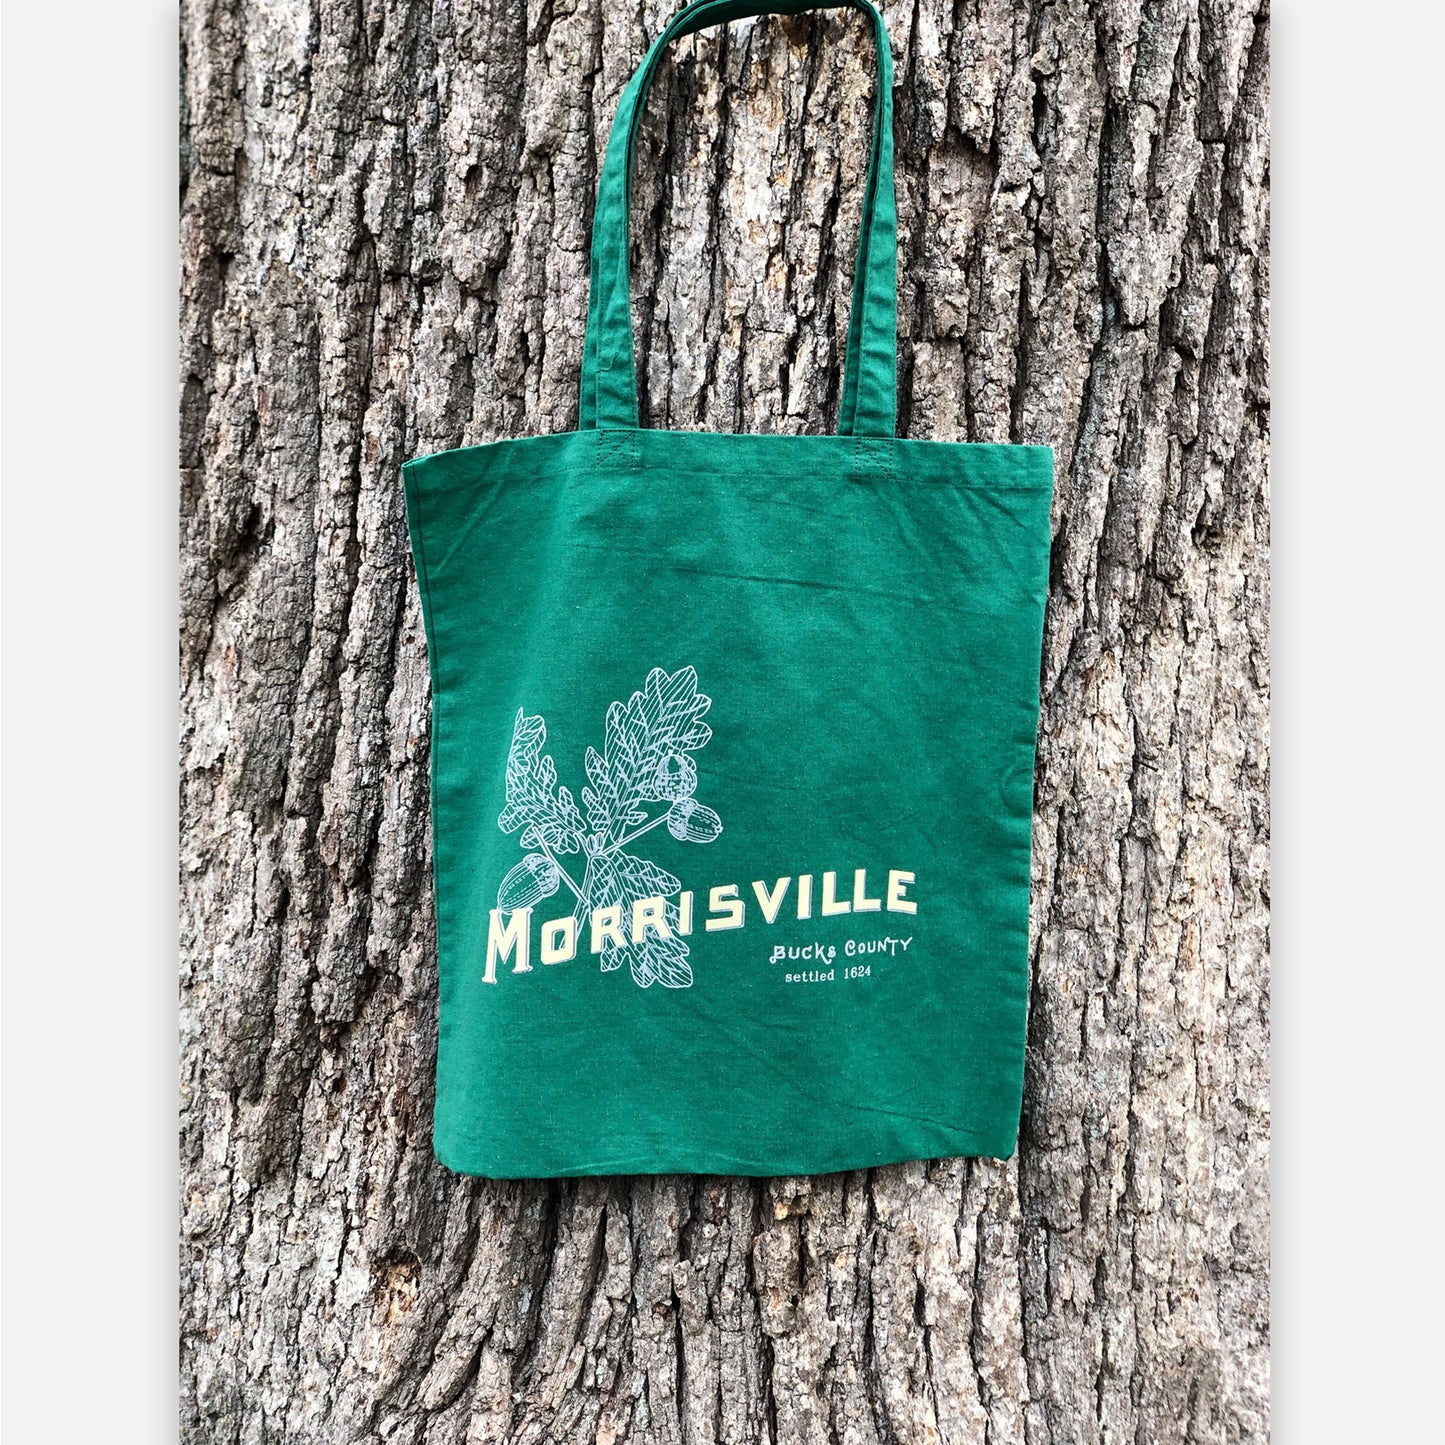 White oak leaves/Morrisville  - canvas tote bag - 8oz green